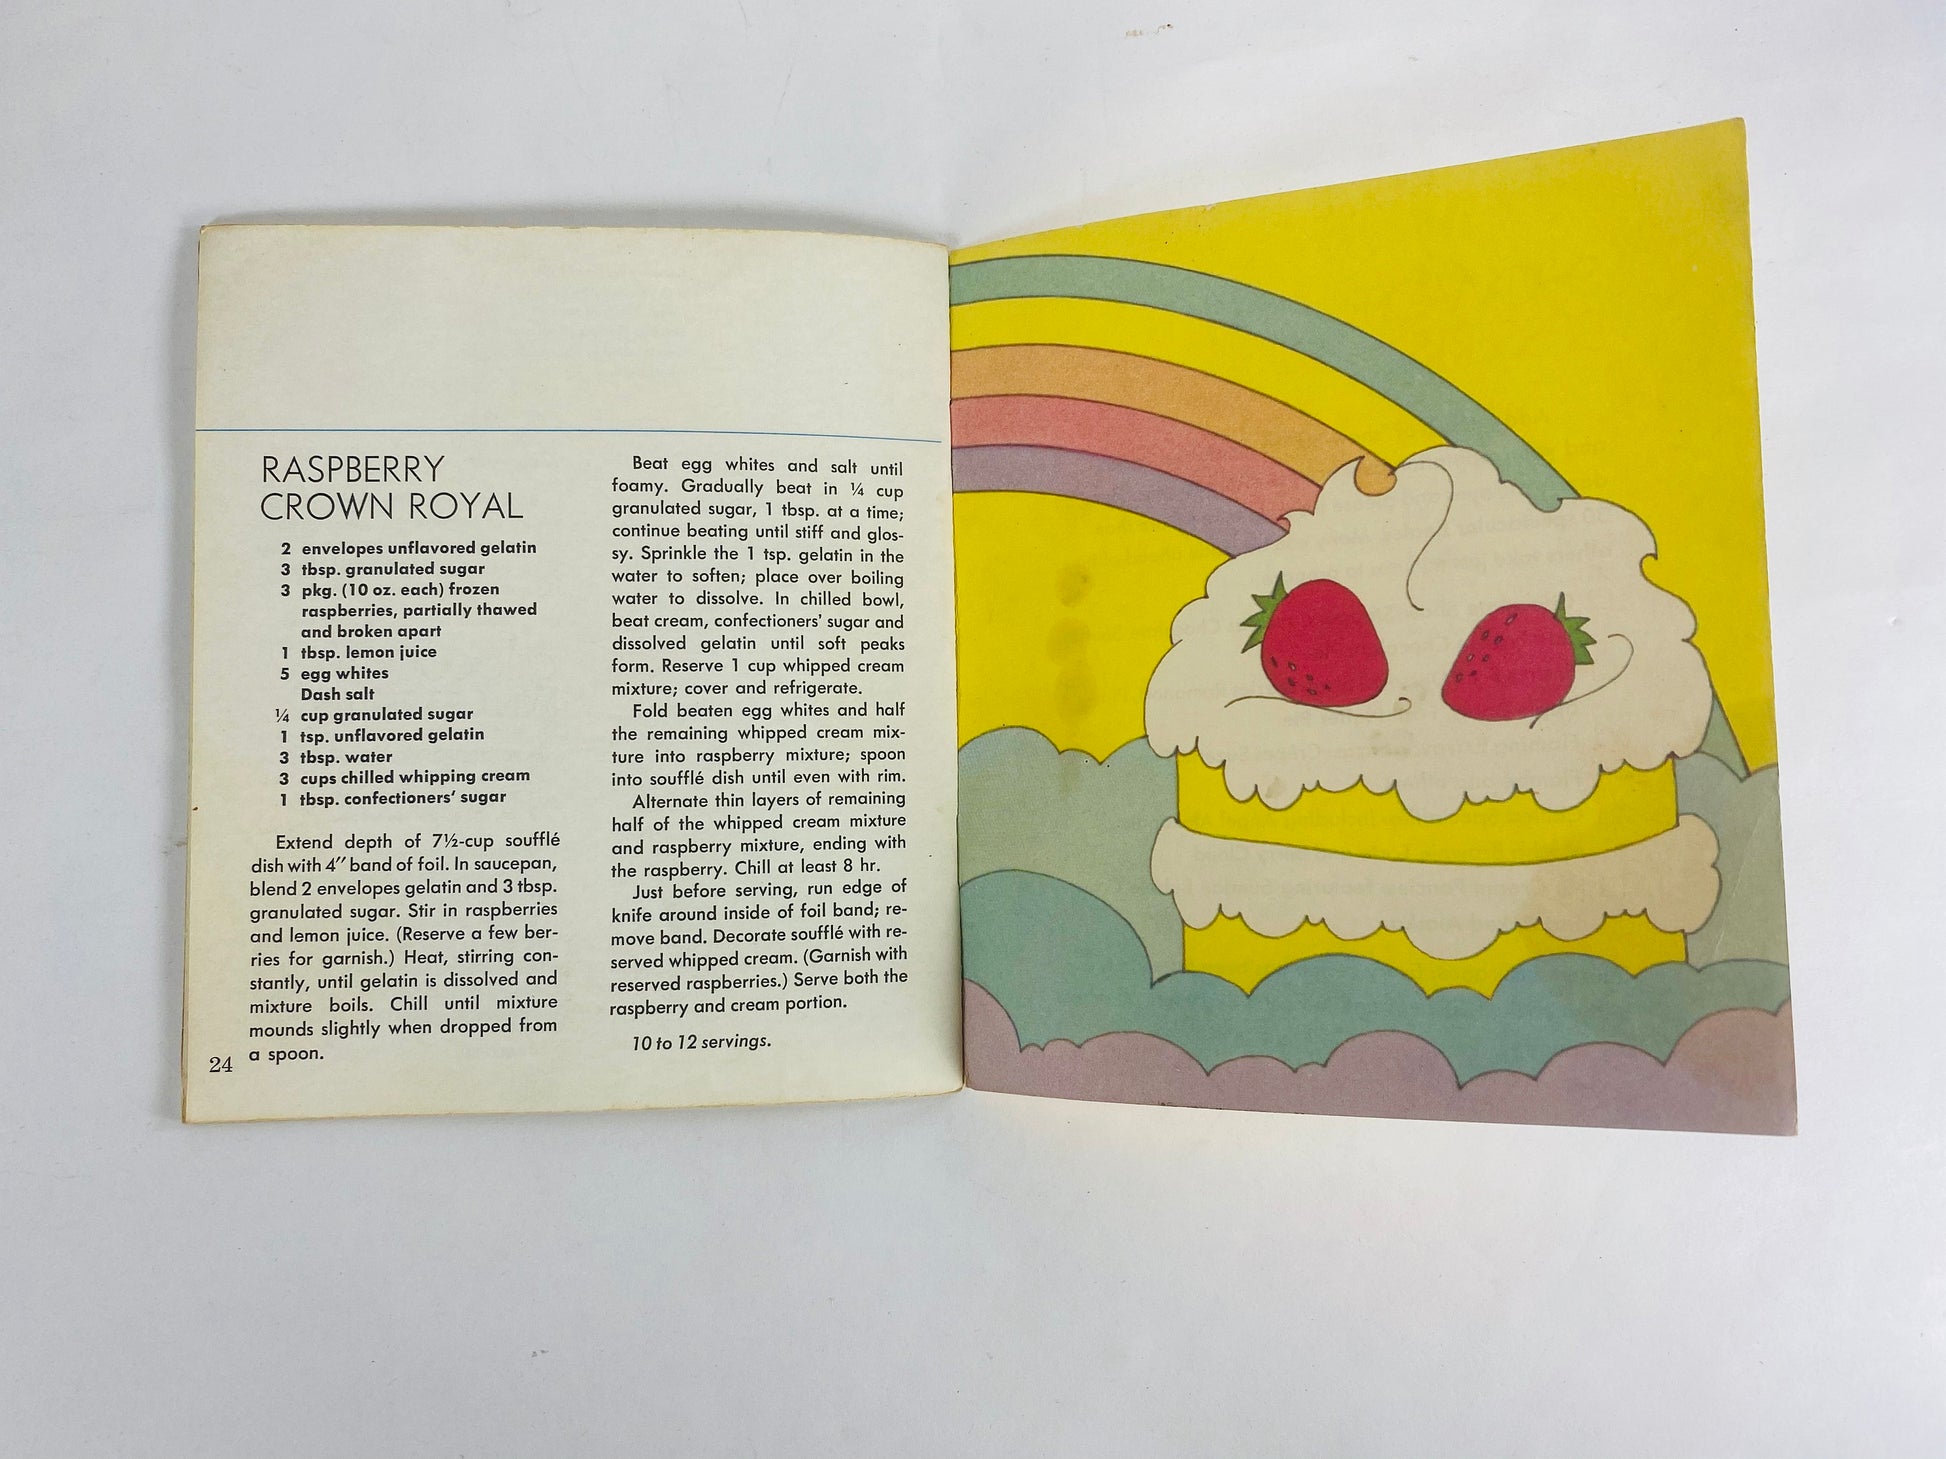 Betty Crocker's Show Off Desserts FIRST EDITION Vintage cookbook pamphlet circa 1970 Golden illustrated by Binnie Weissleder. Poor Condition